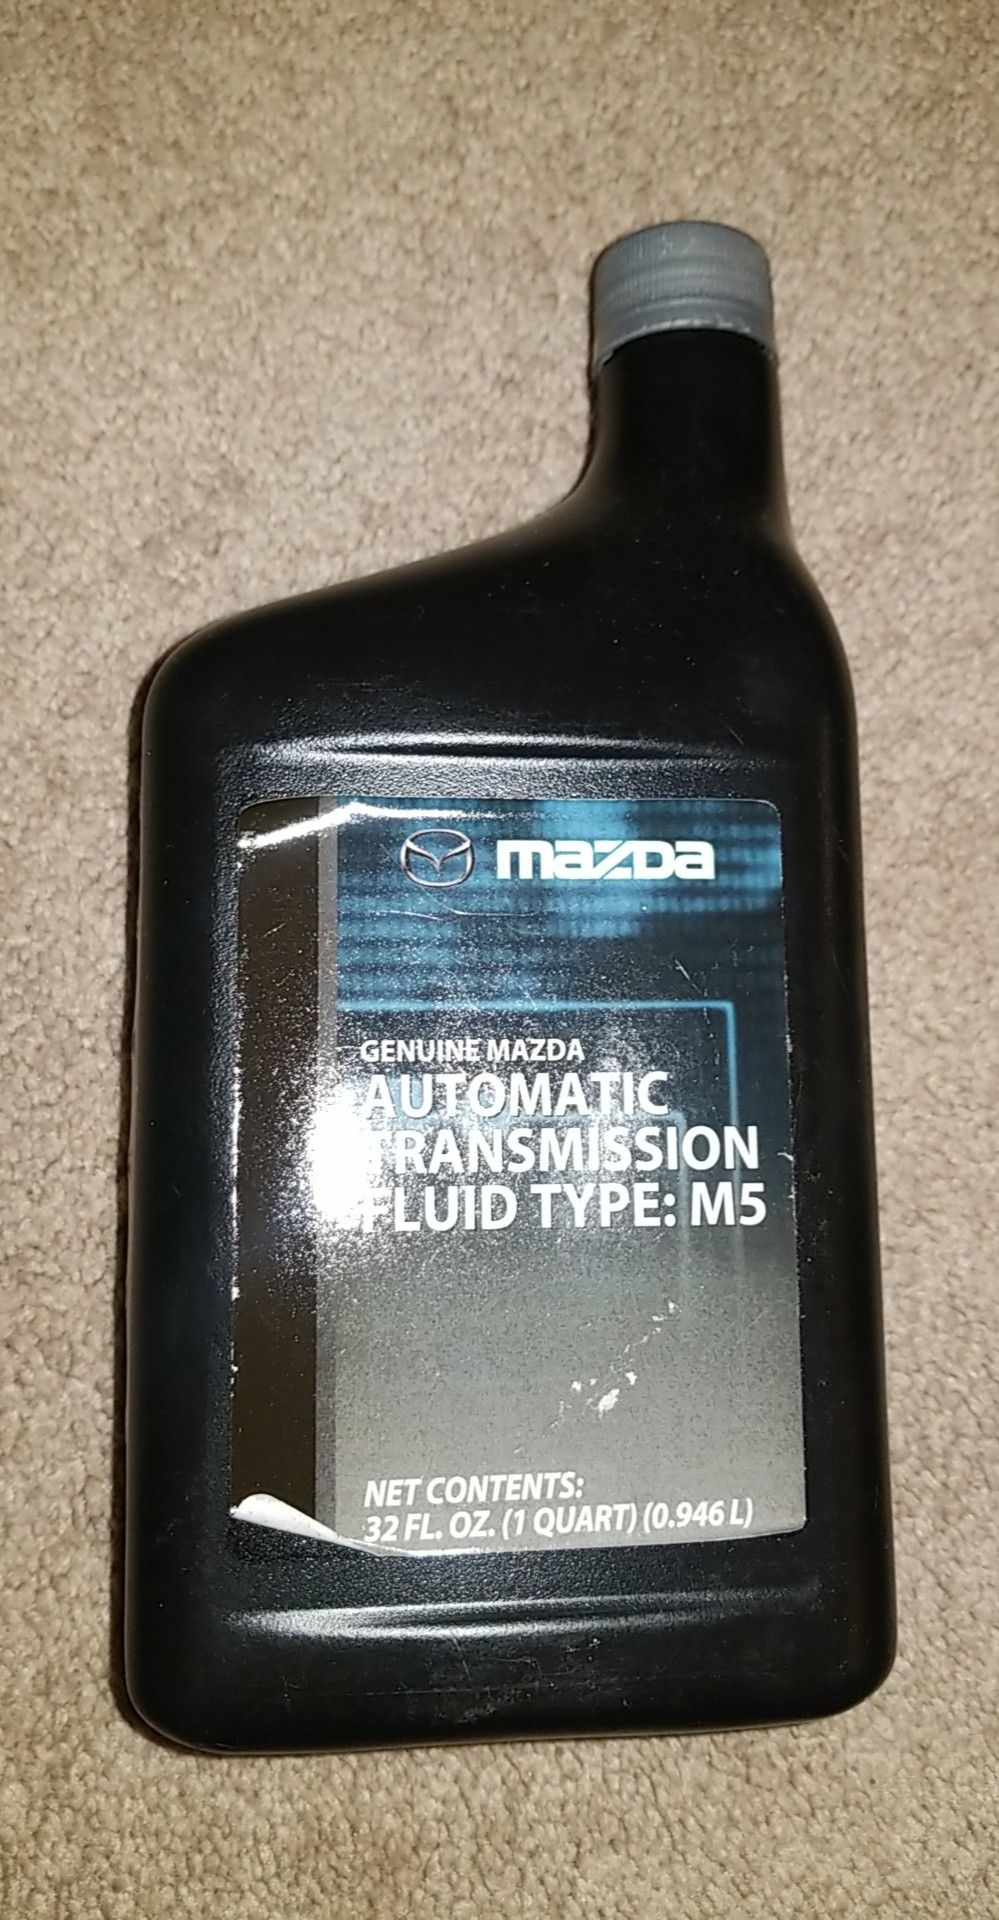 Mazda transmission fluid sealed 6 quarts